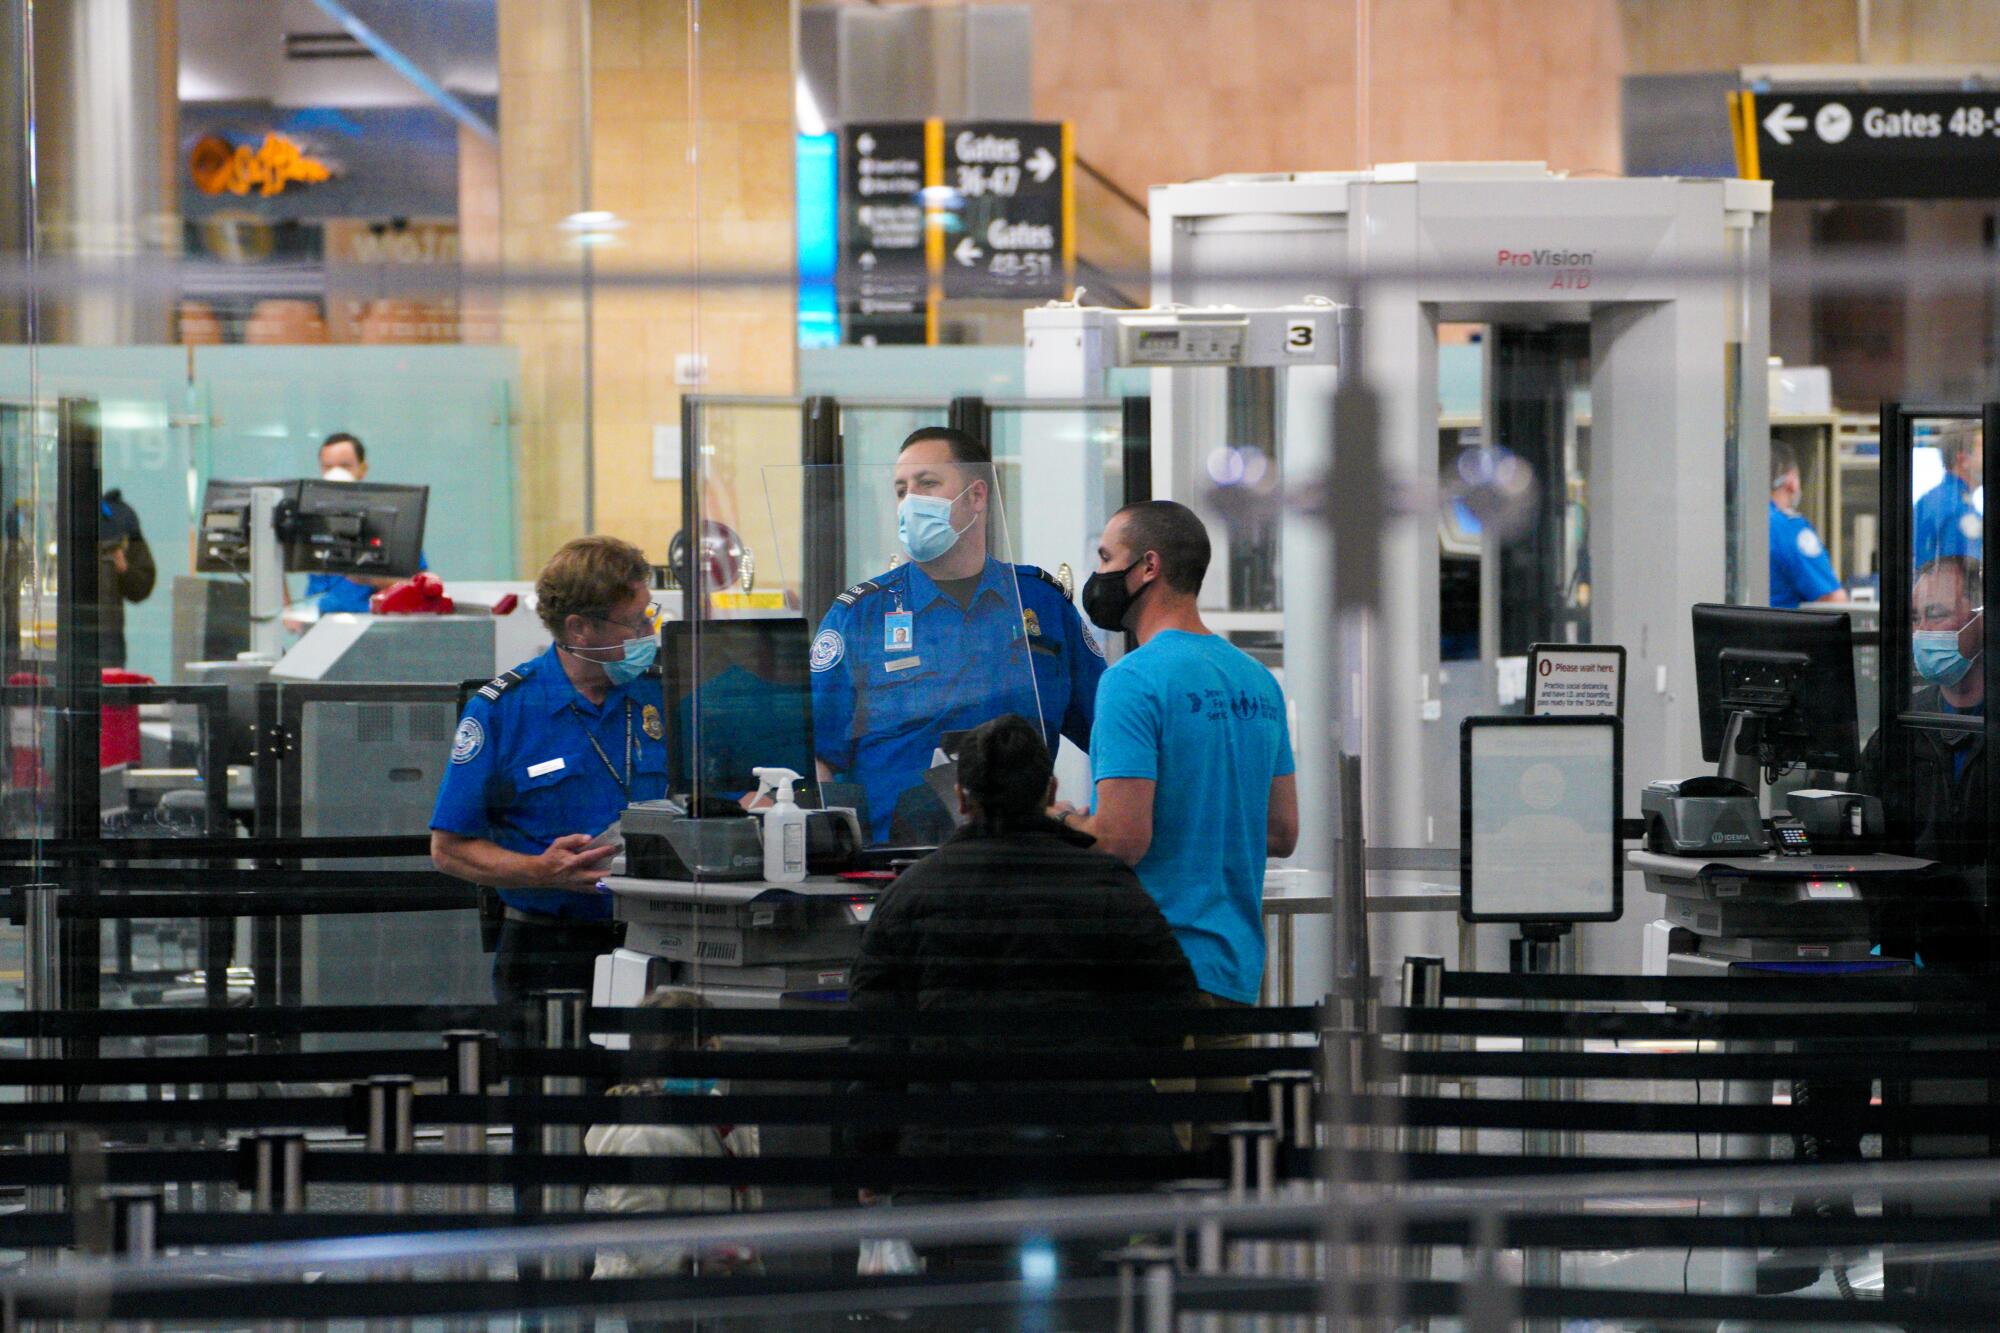 A TSA security checkpoint at an airport